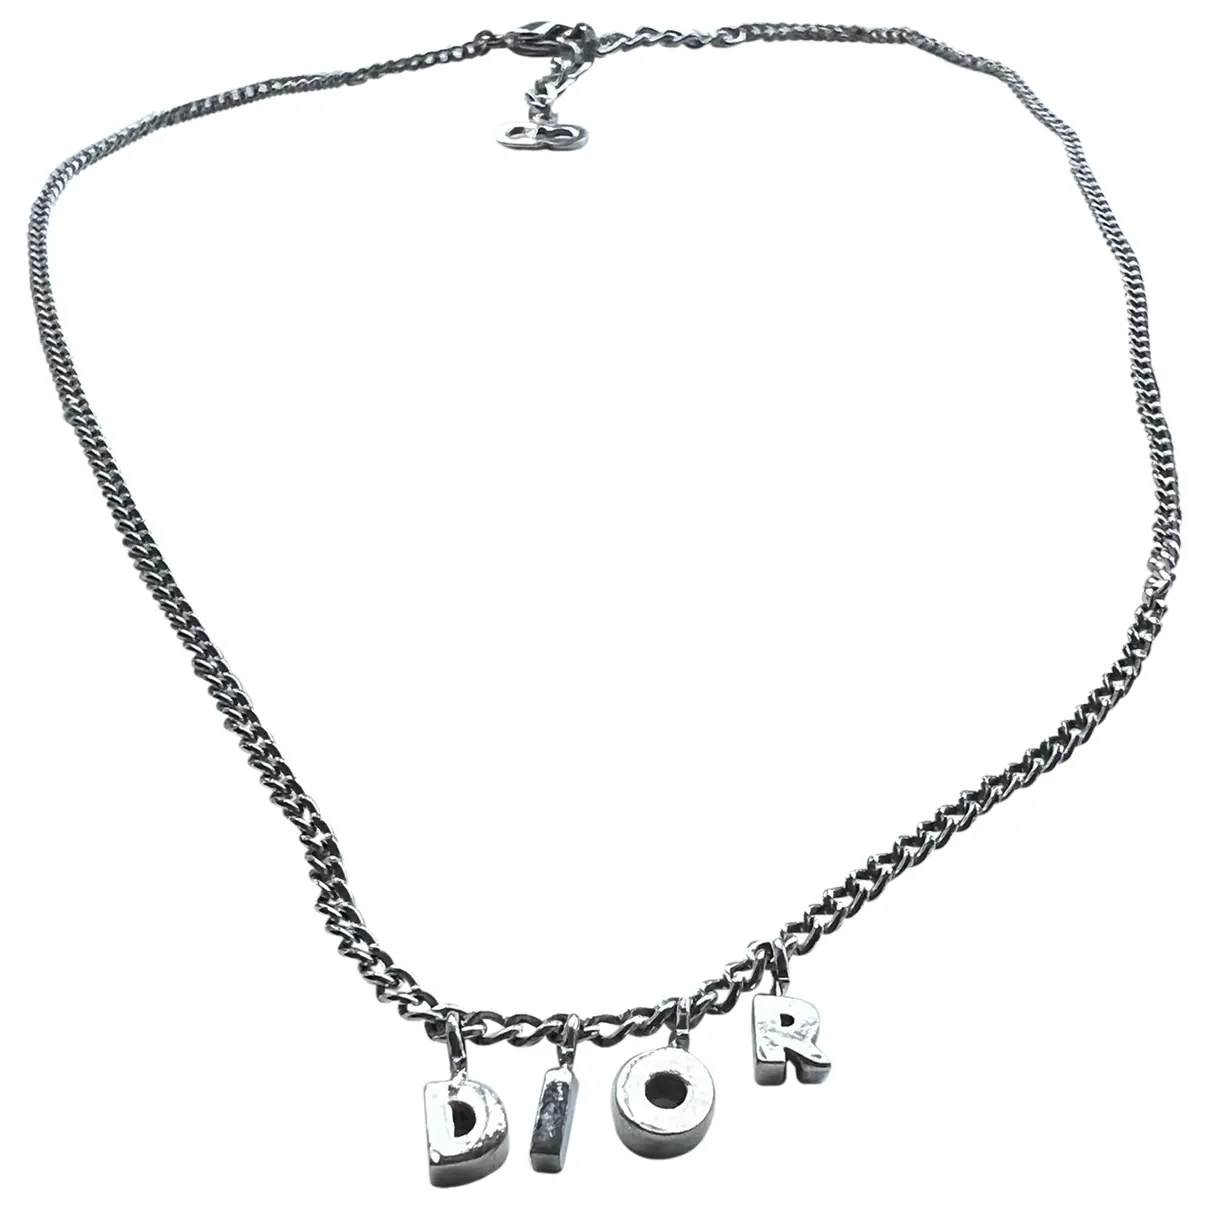 Dio(r)evolution necklace